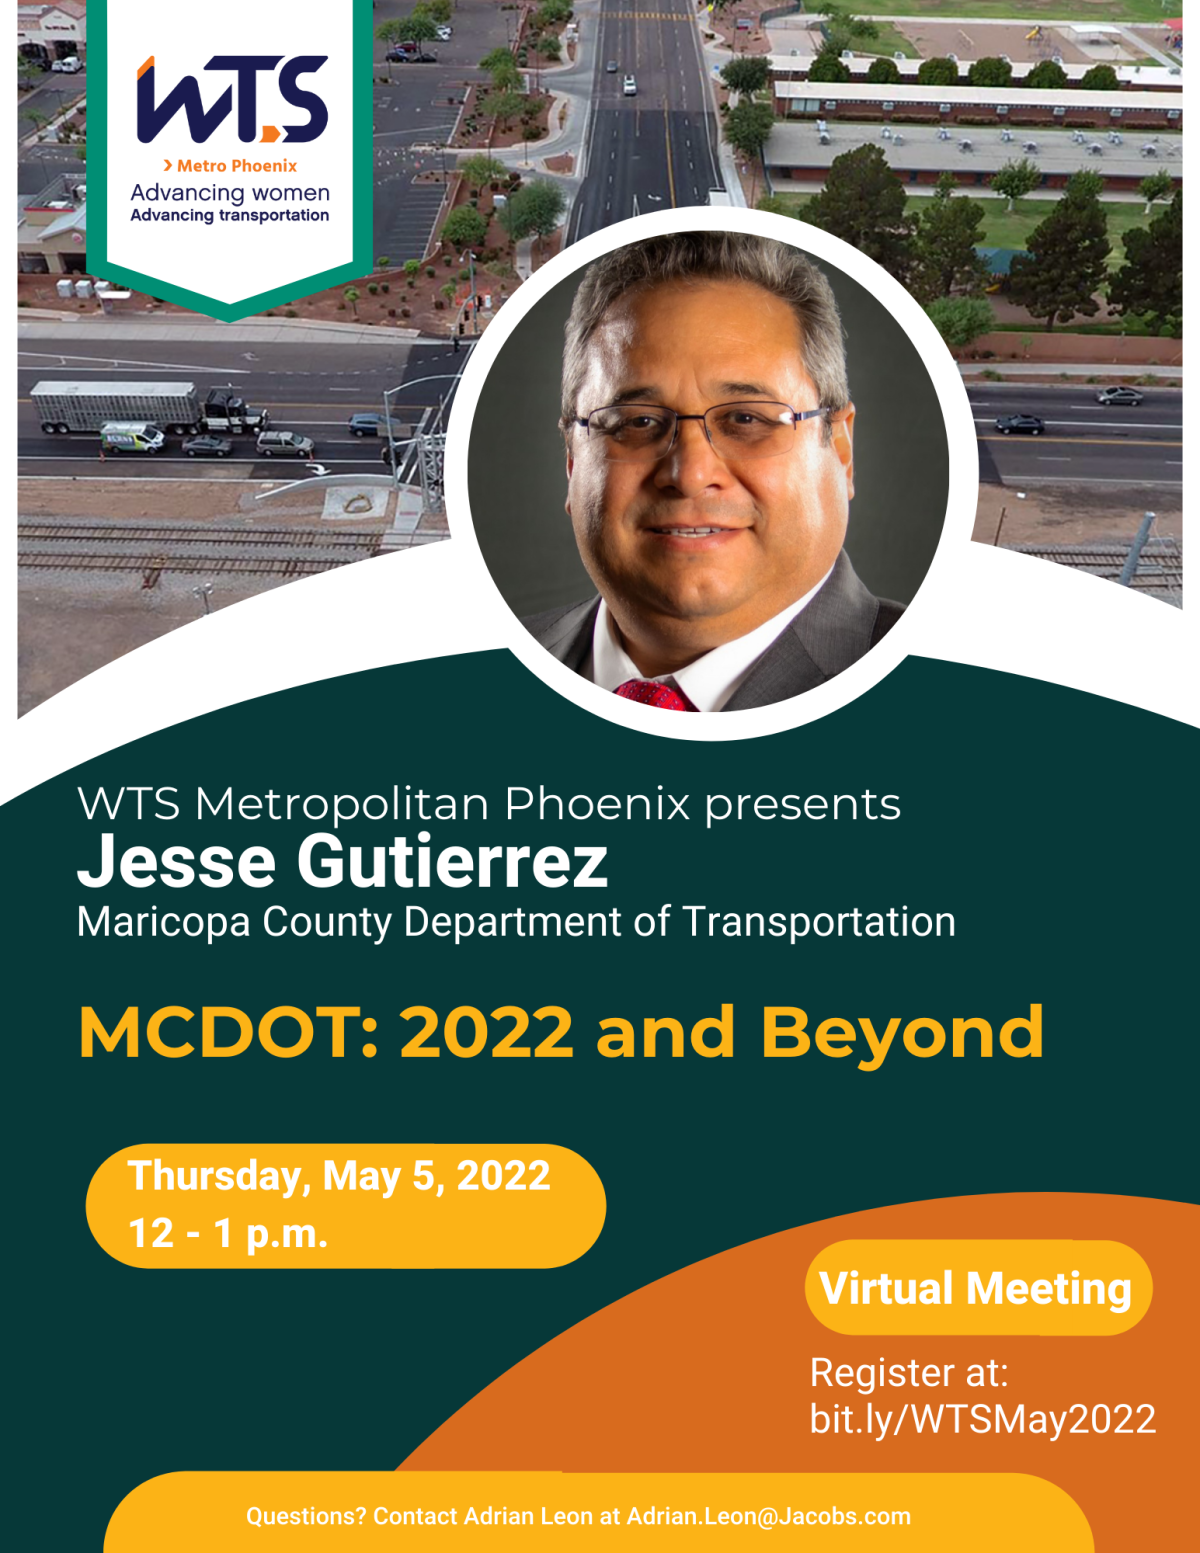 Metro Phoenix presents Jesse Gutierrez